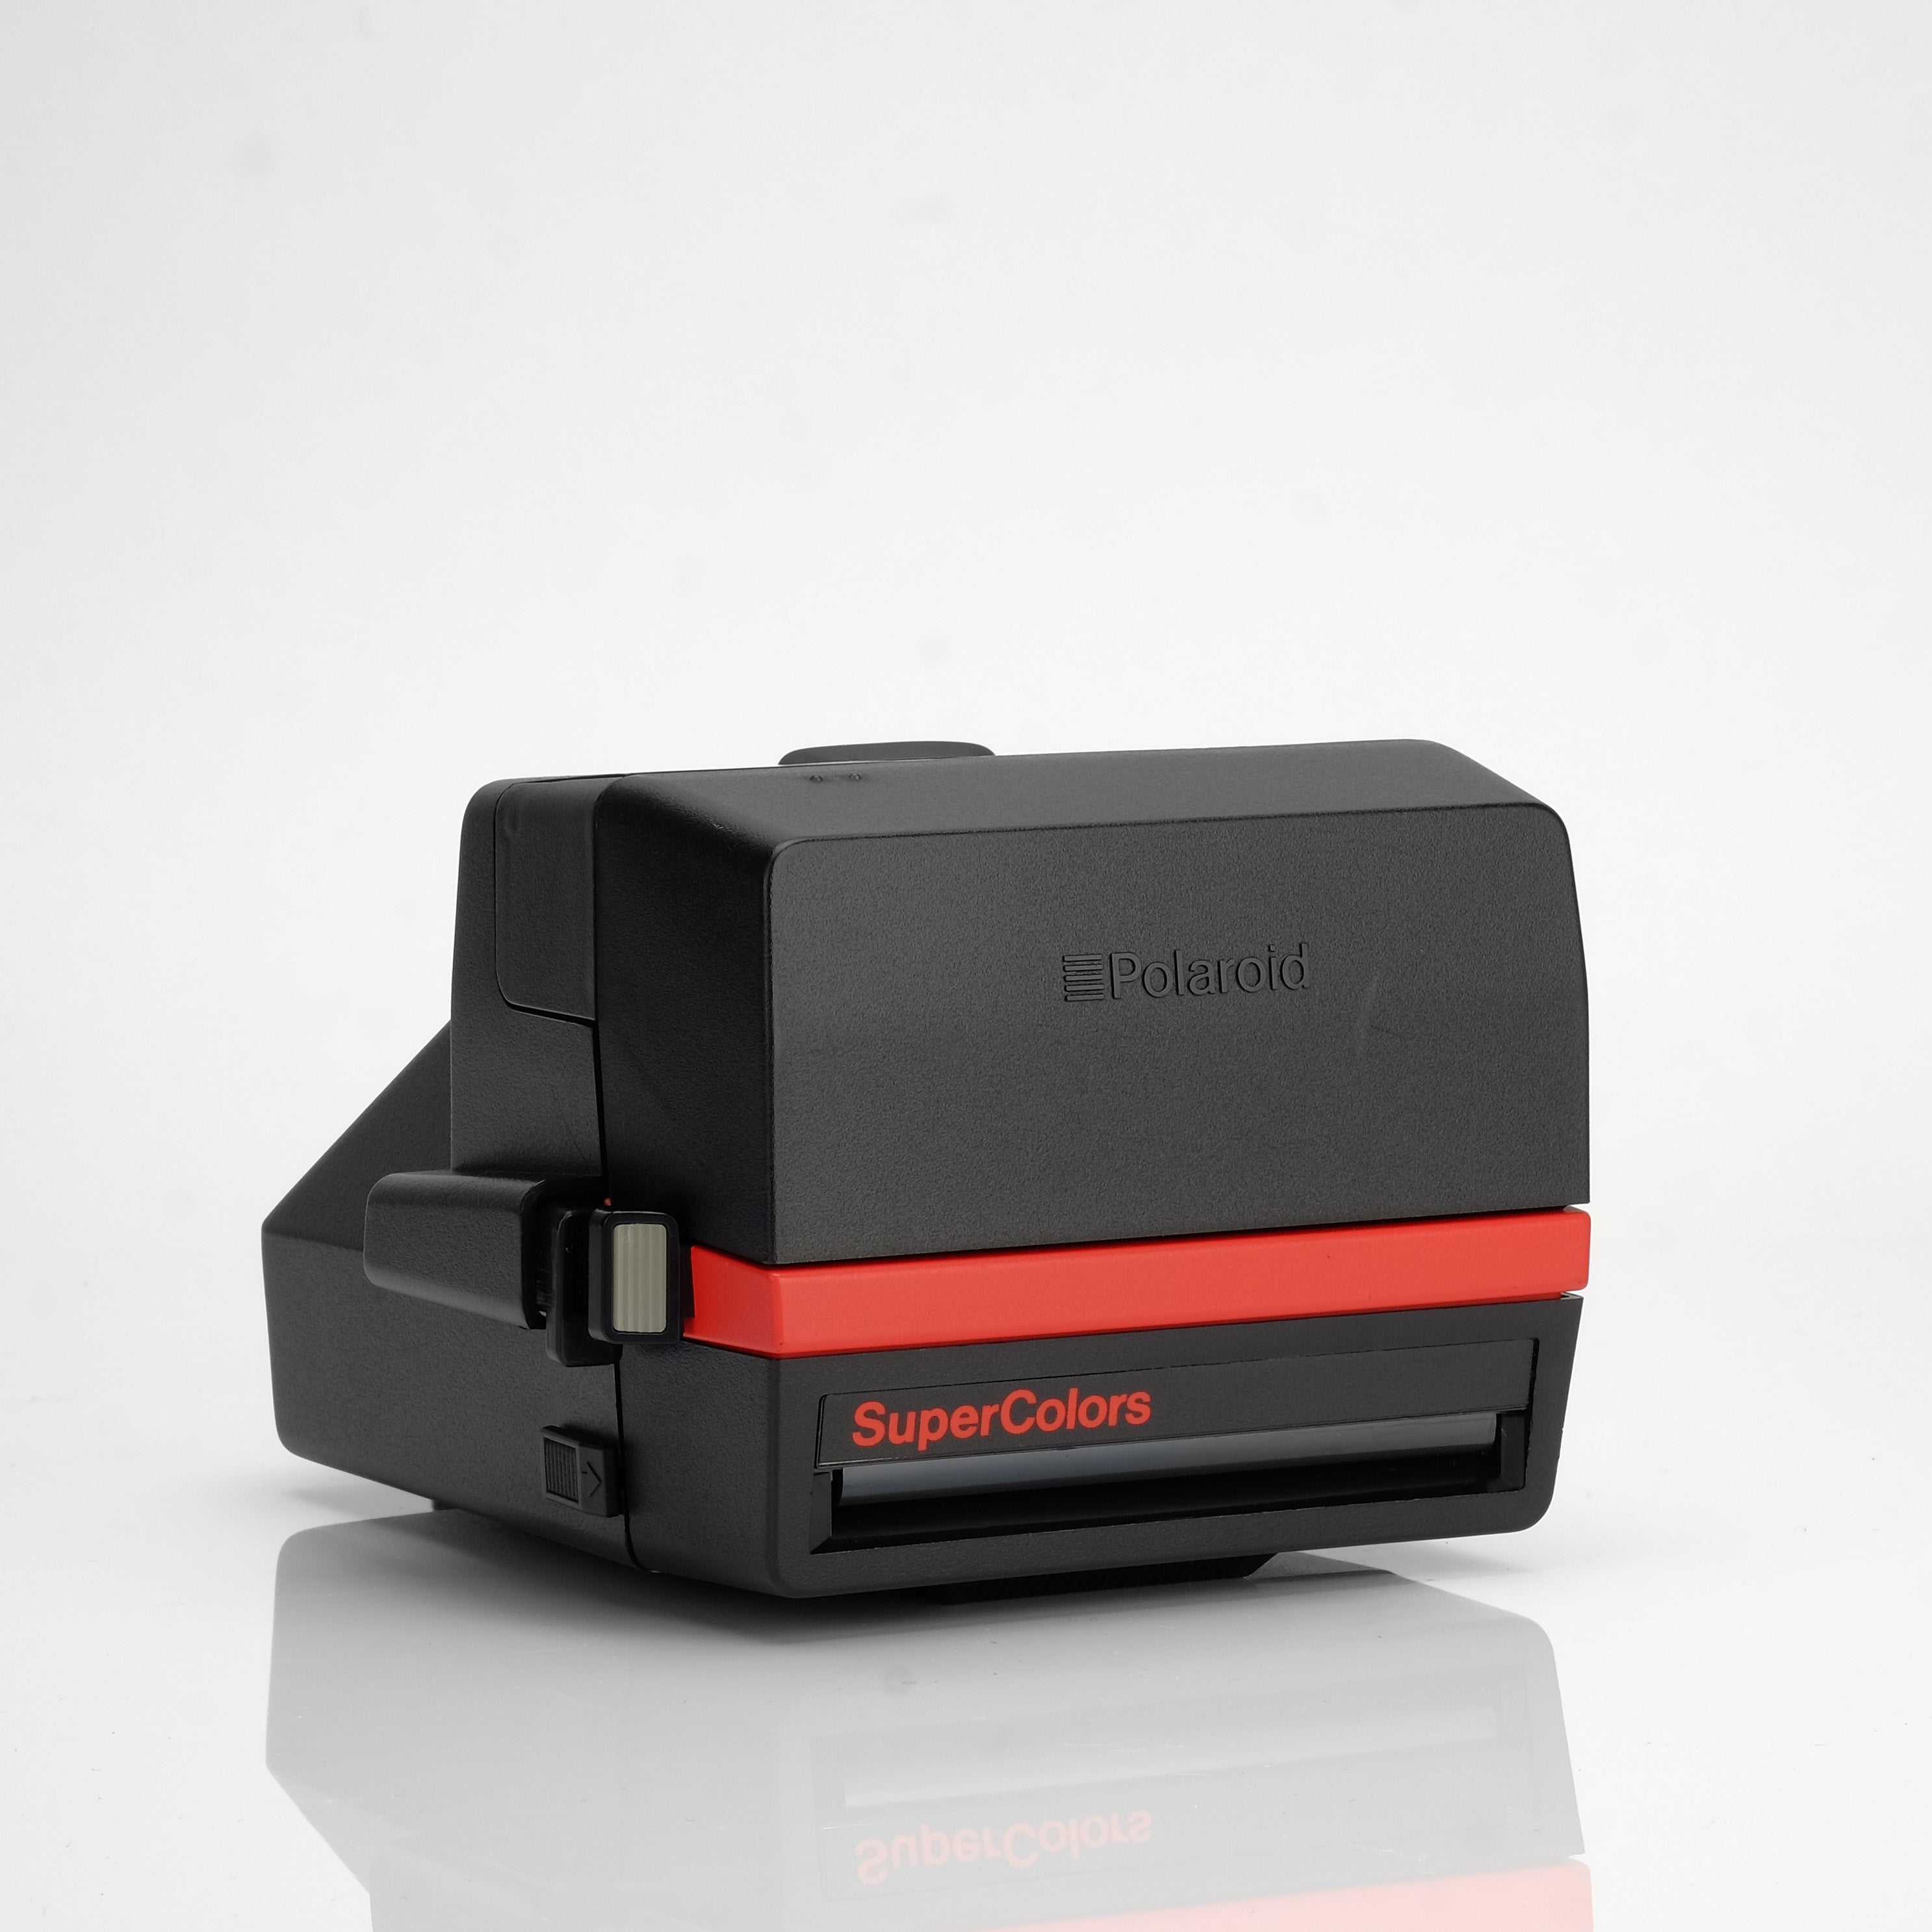 Polaroid 600 Supercolors Red Instant Film Camera